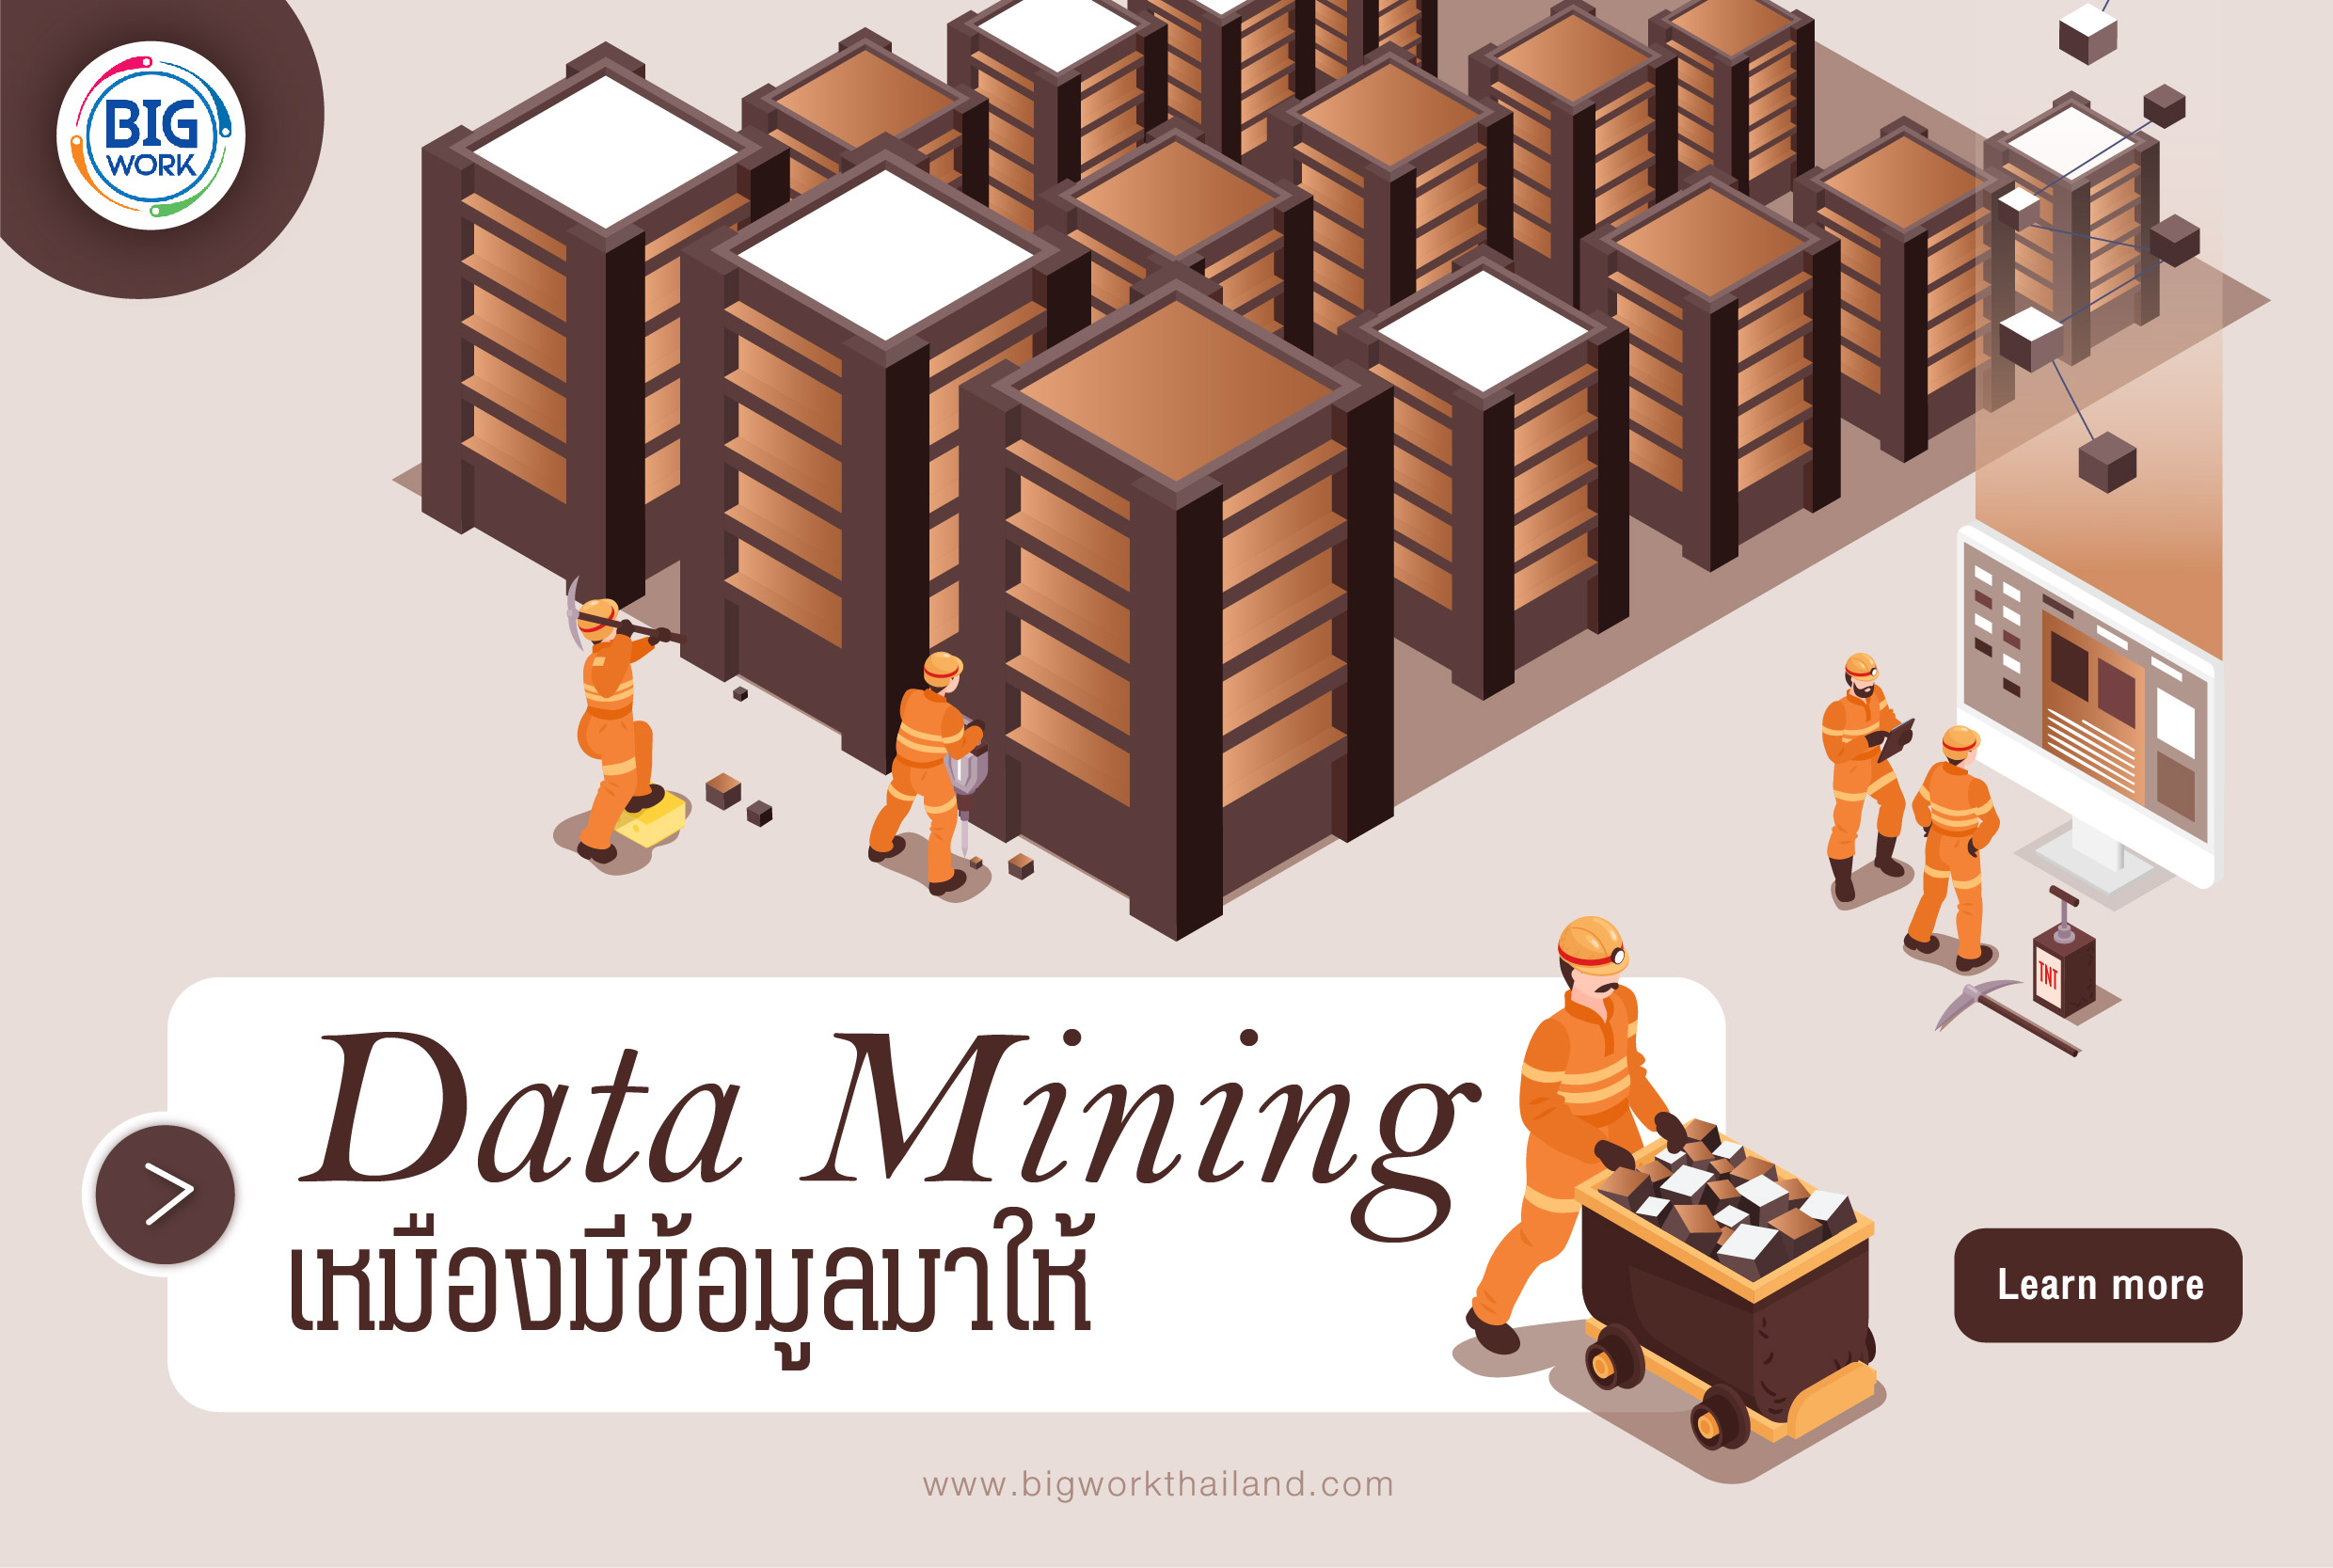 Data Mining เหมืองมีข้อมูลมาให้